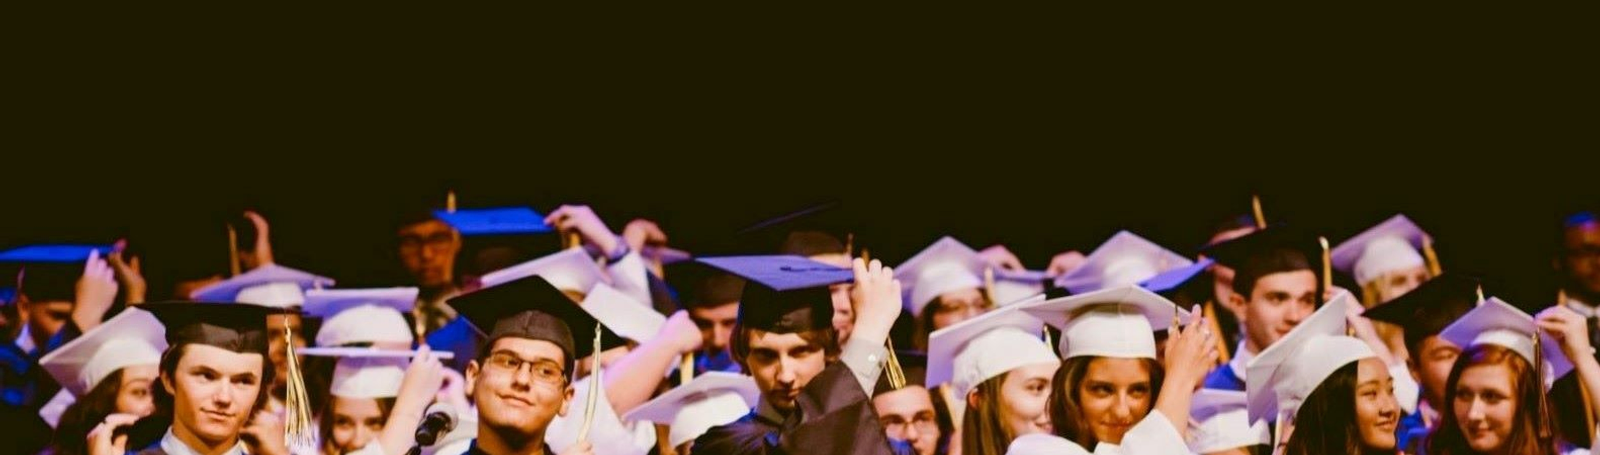 high school grads adjusting their graduation cap tassels at graduation ceremony